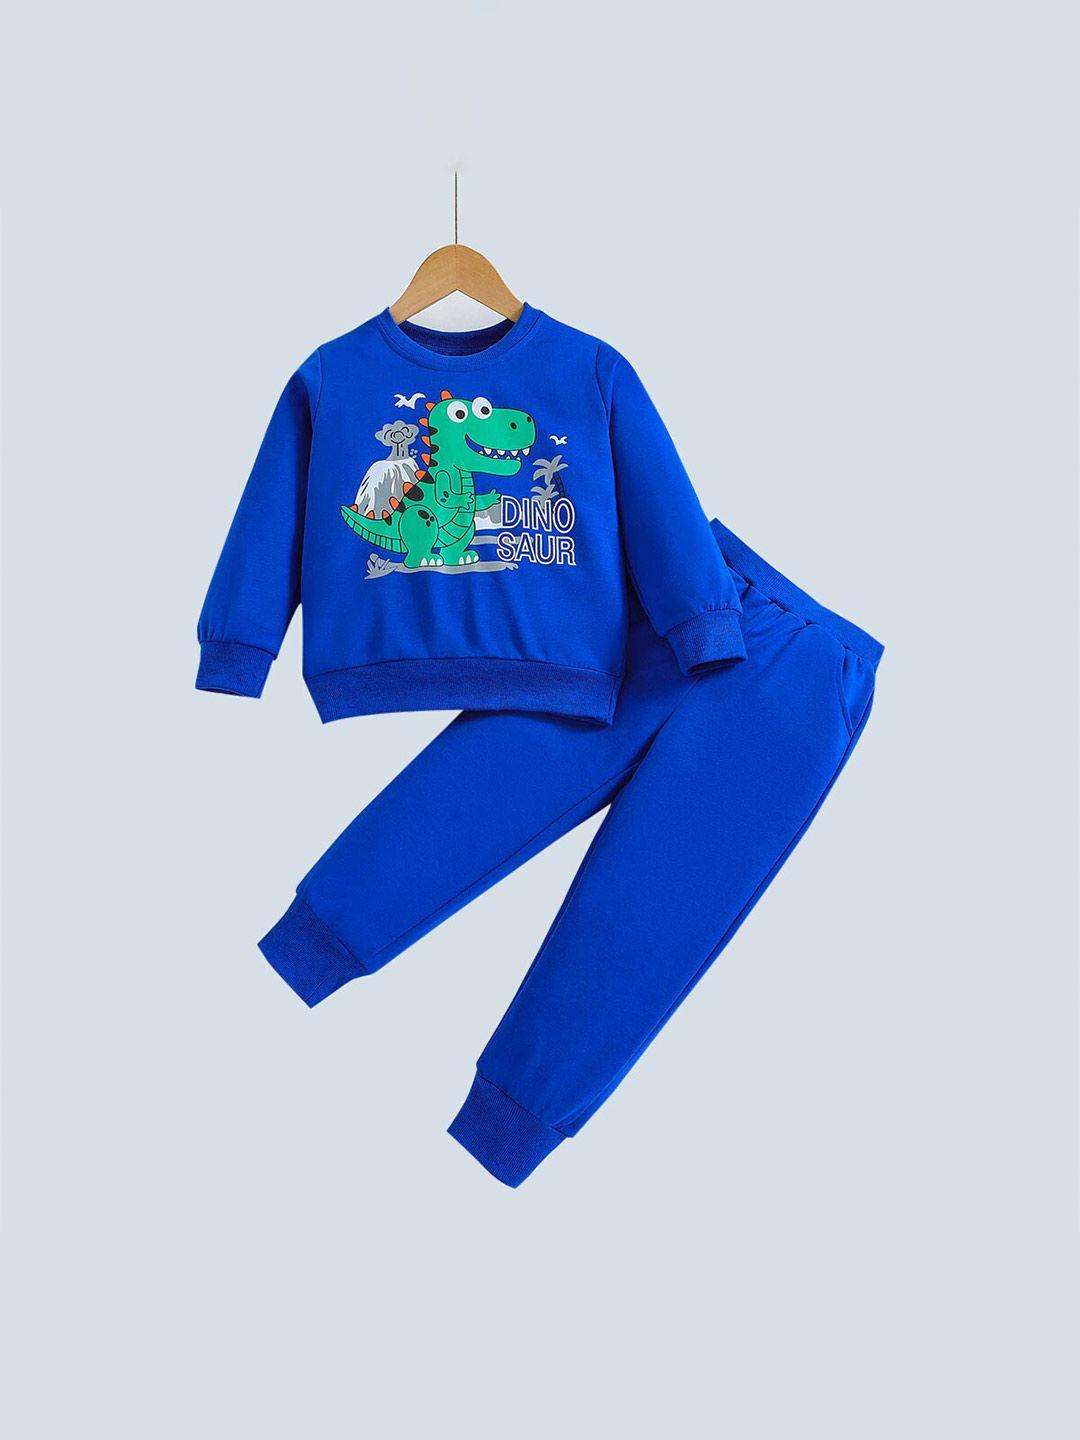 googo-gaaga-boys-blue-&-green-printed-t-shirt-with-pyjamas